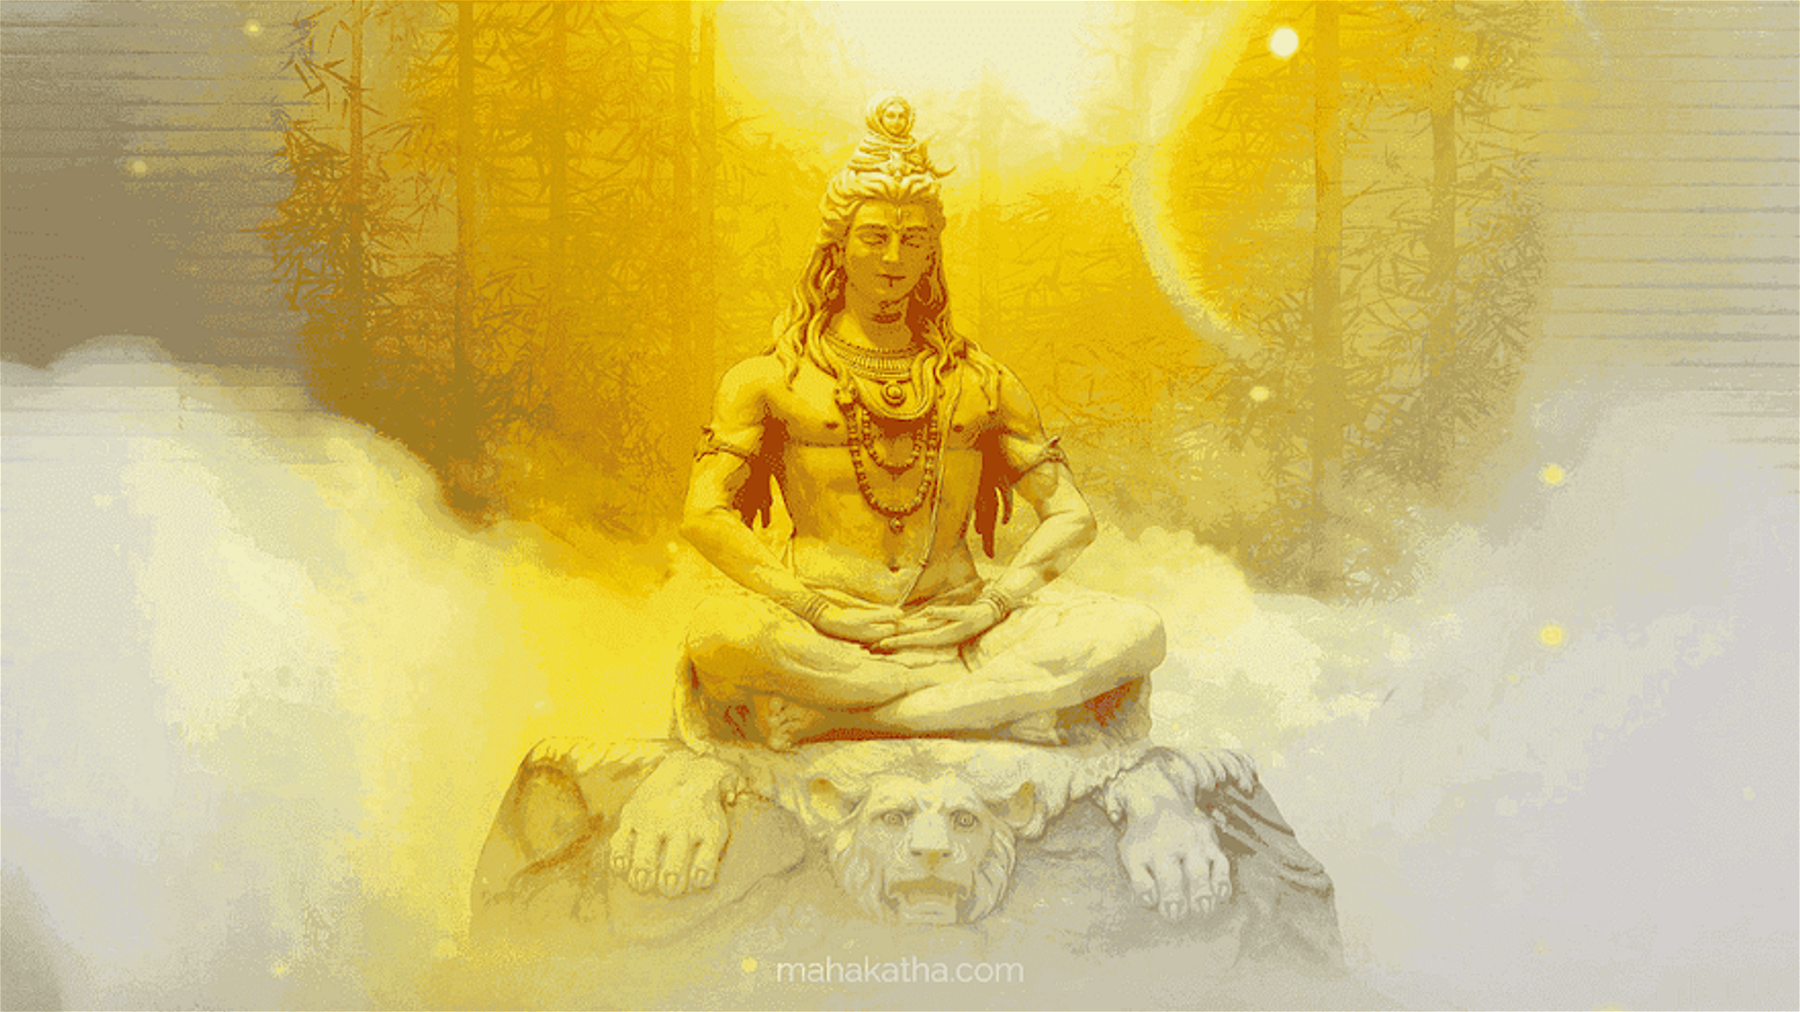 Nirvana Shatakam Mantra - An ultimate guide